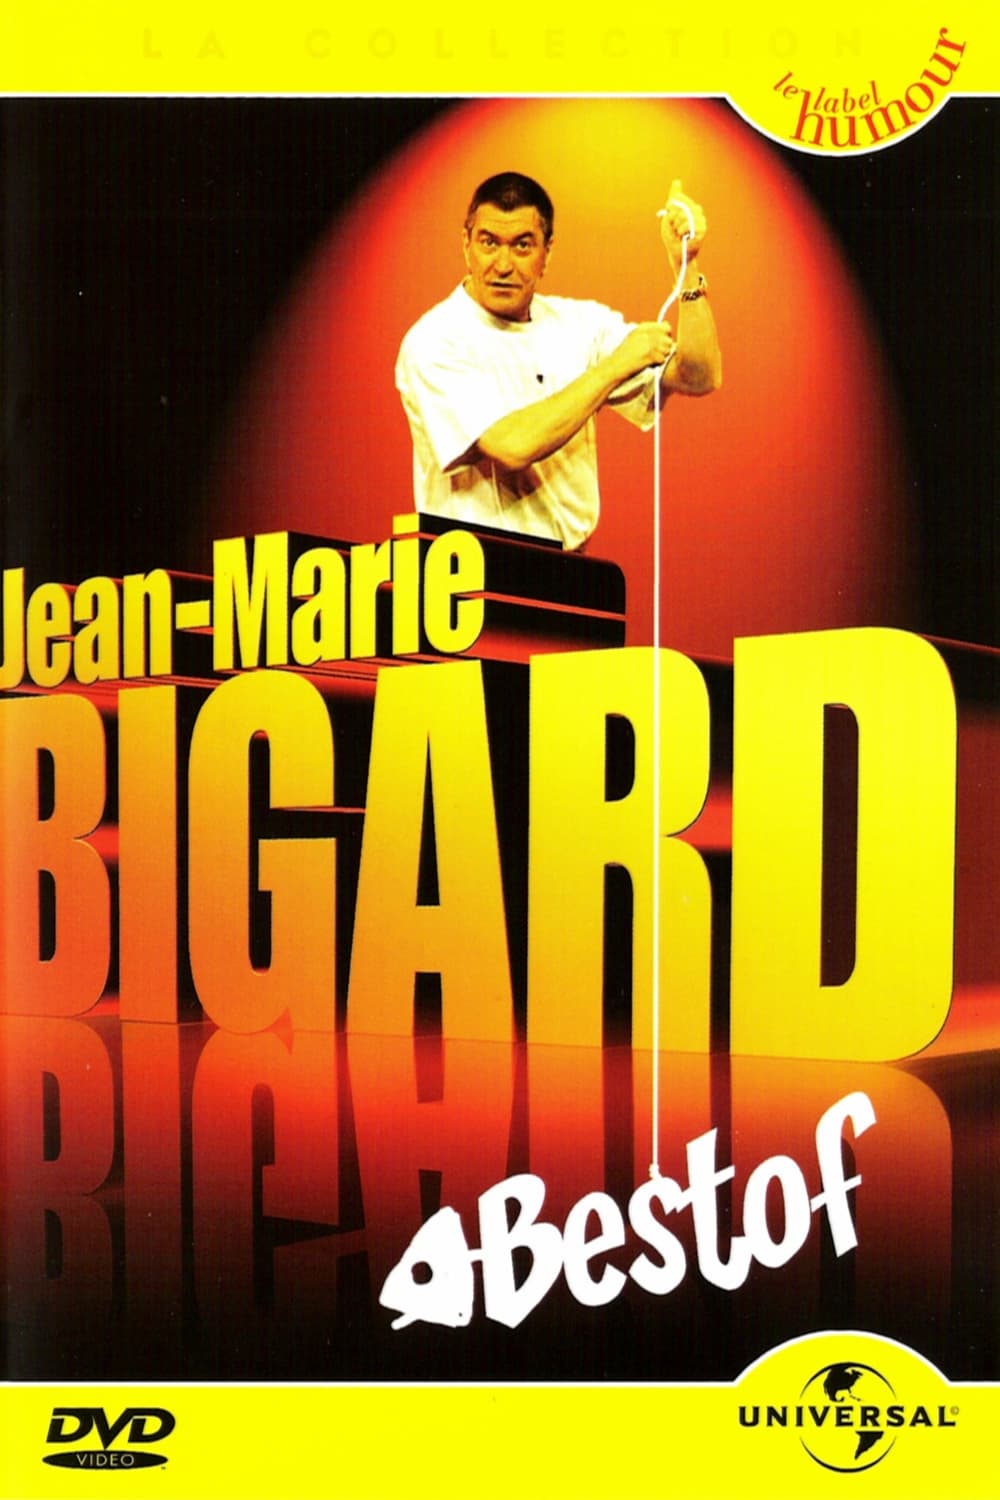 Jean-Marie Bigard - Best of